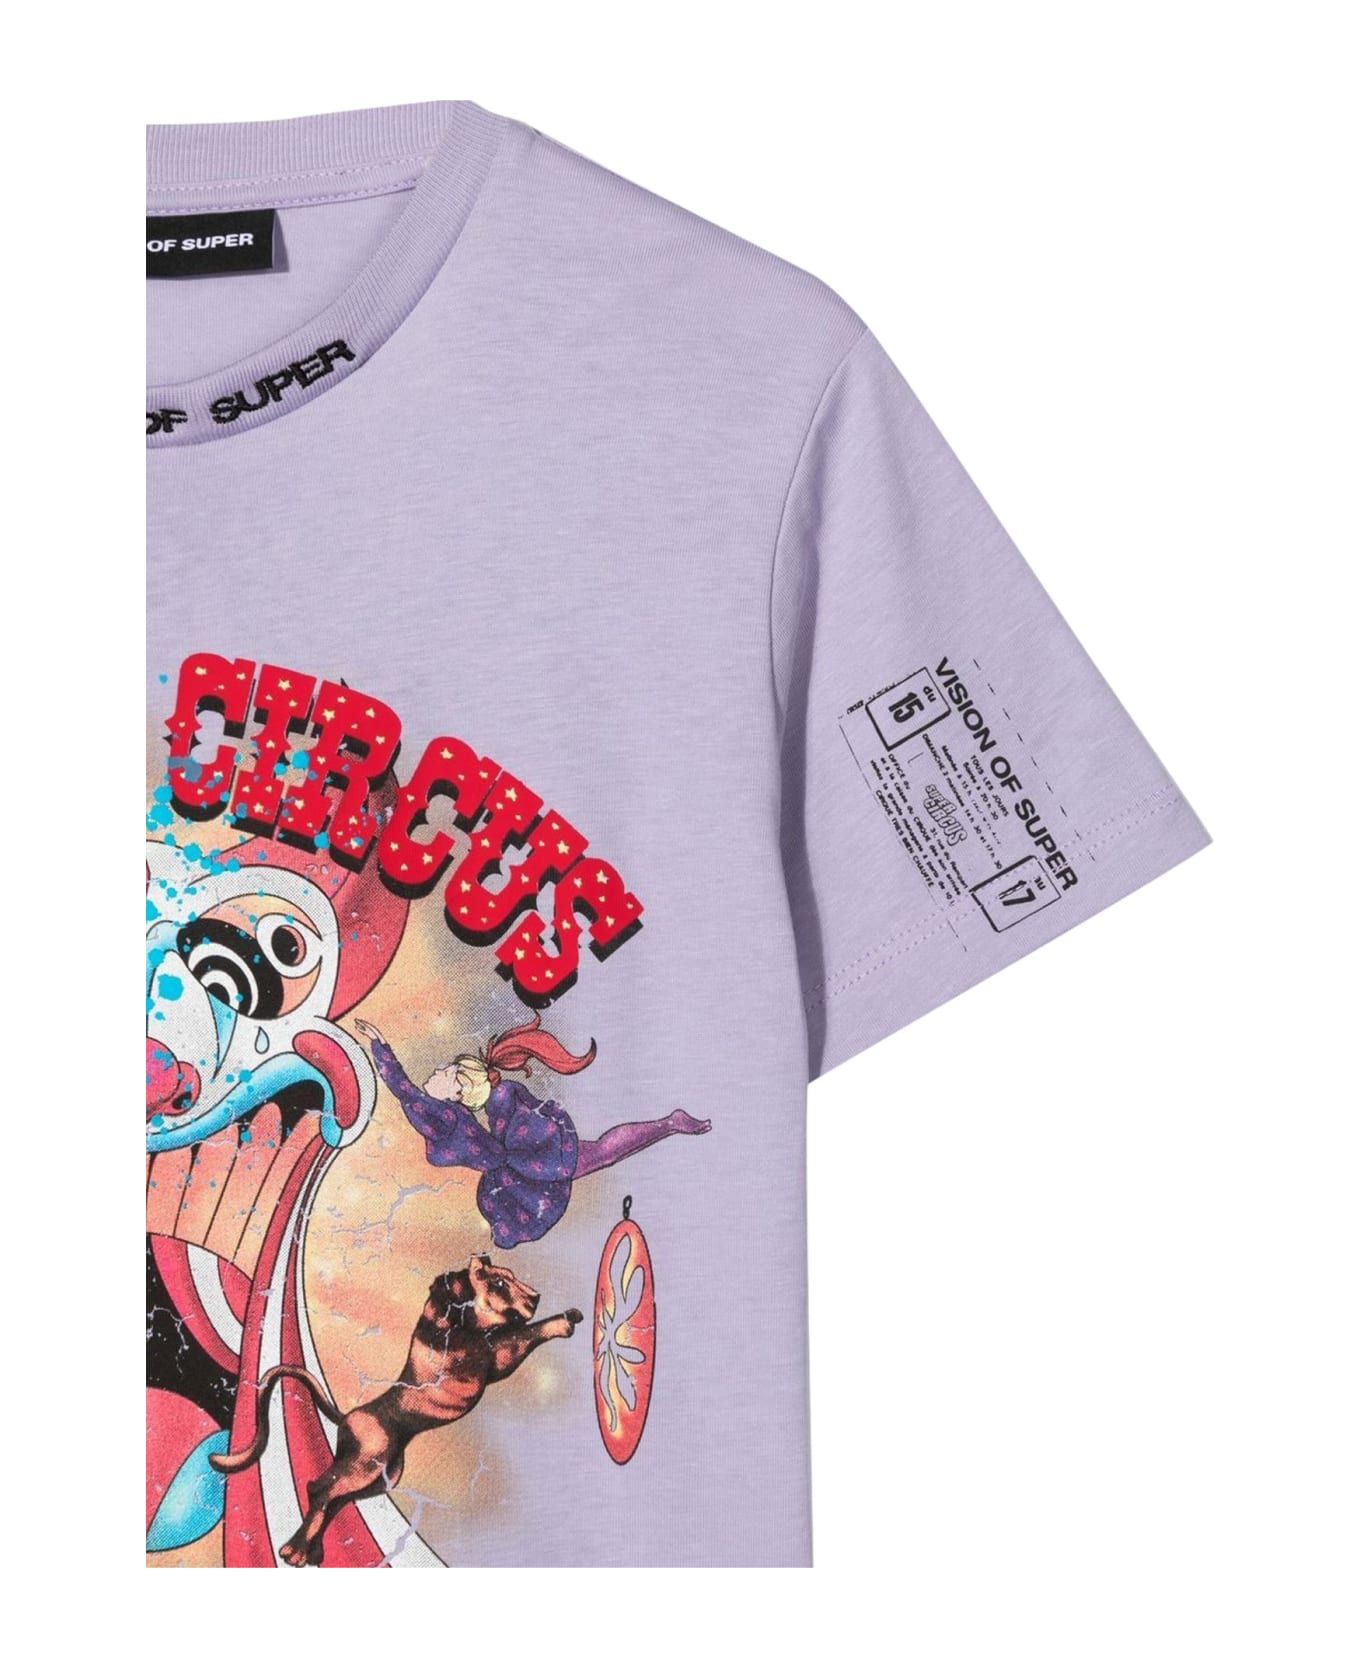 Vision of Super Lilac Kids T-shirt With Tongue Print - LILLA